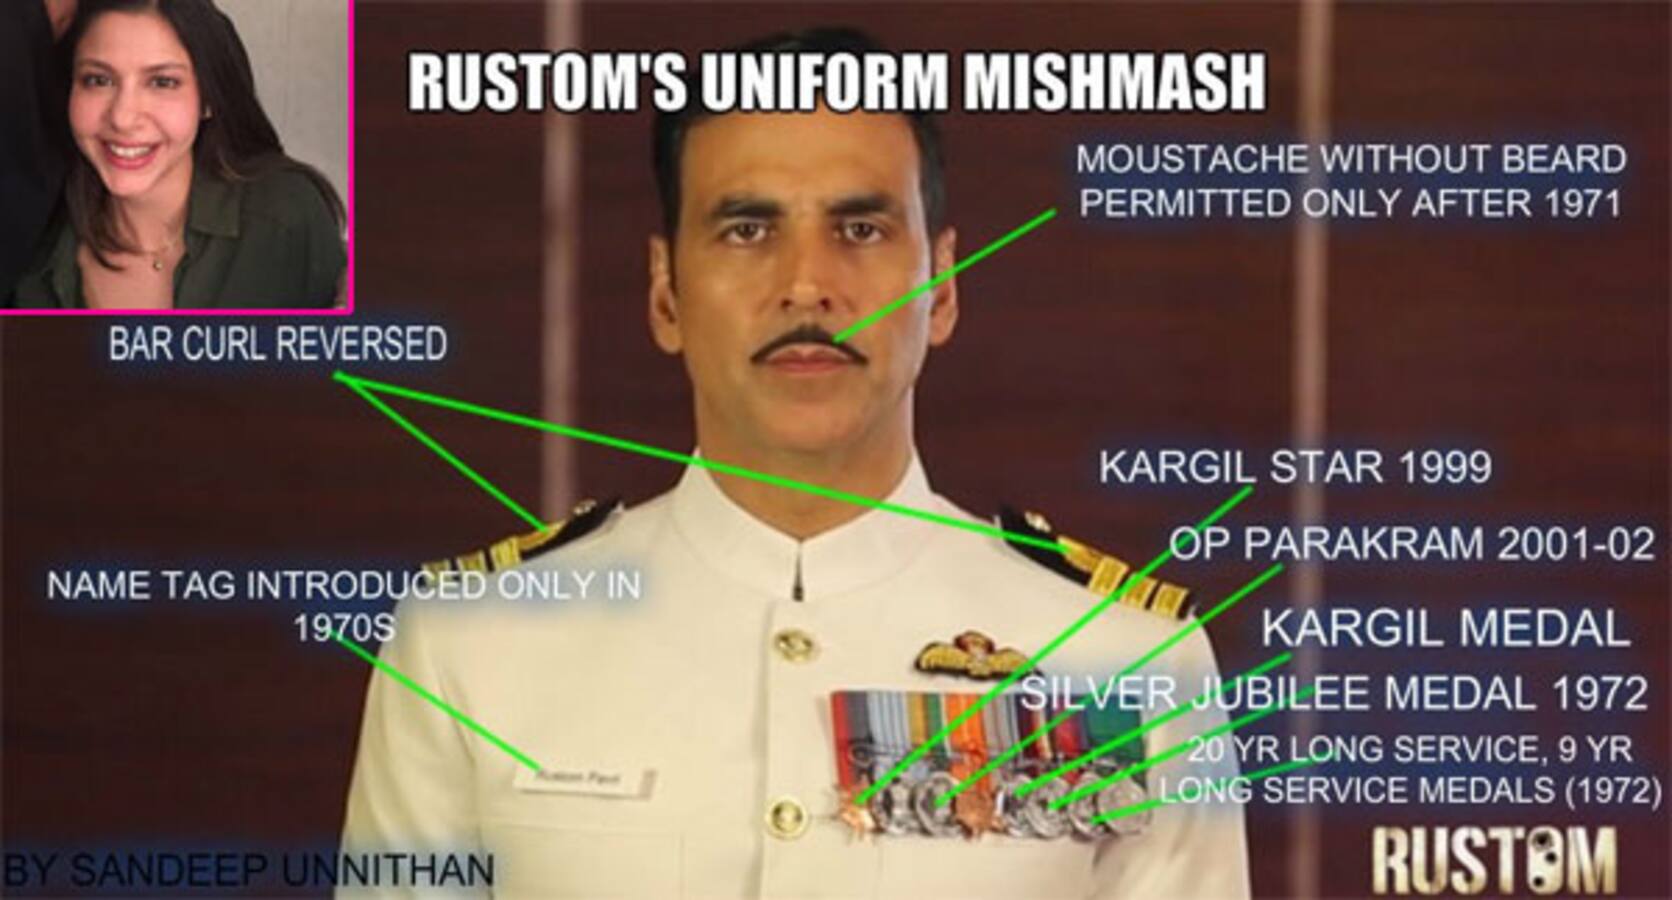 Akshay Kumar's Rustom uniform controversy: You must take cinematic liberties, says costume designer Ameira Punvani